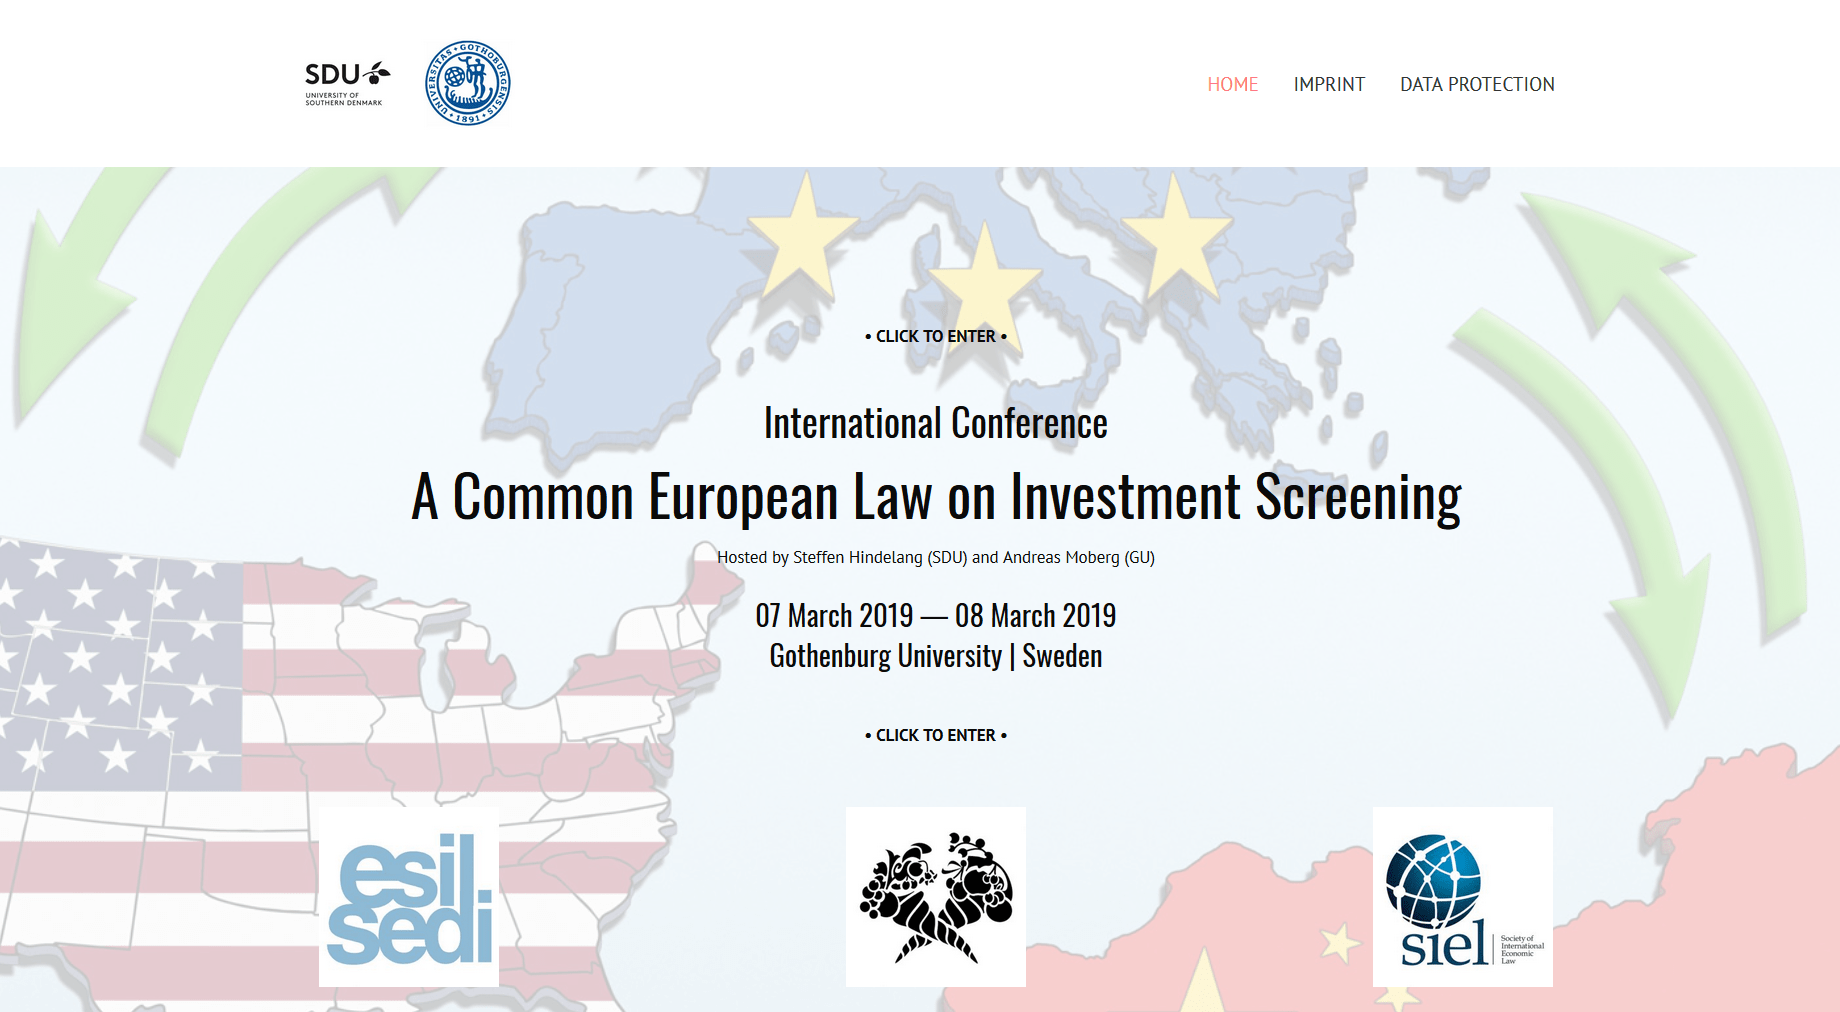 www.europeaninvestmentlaw.eu